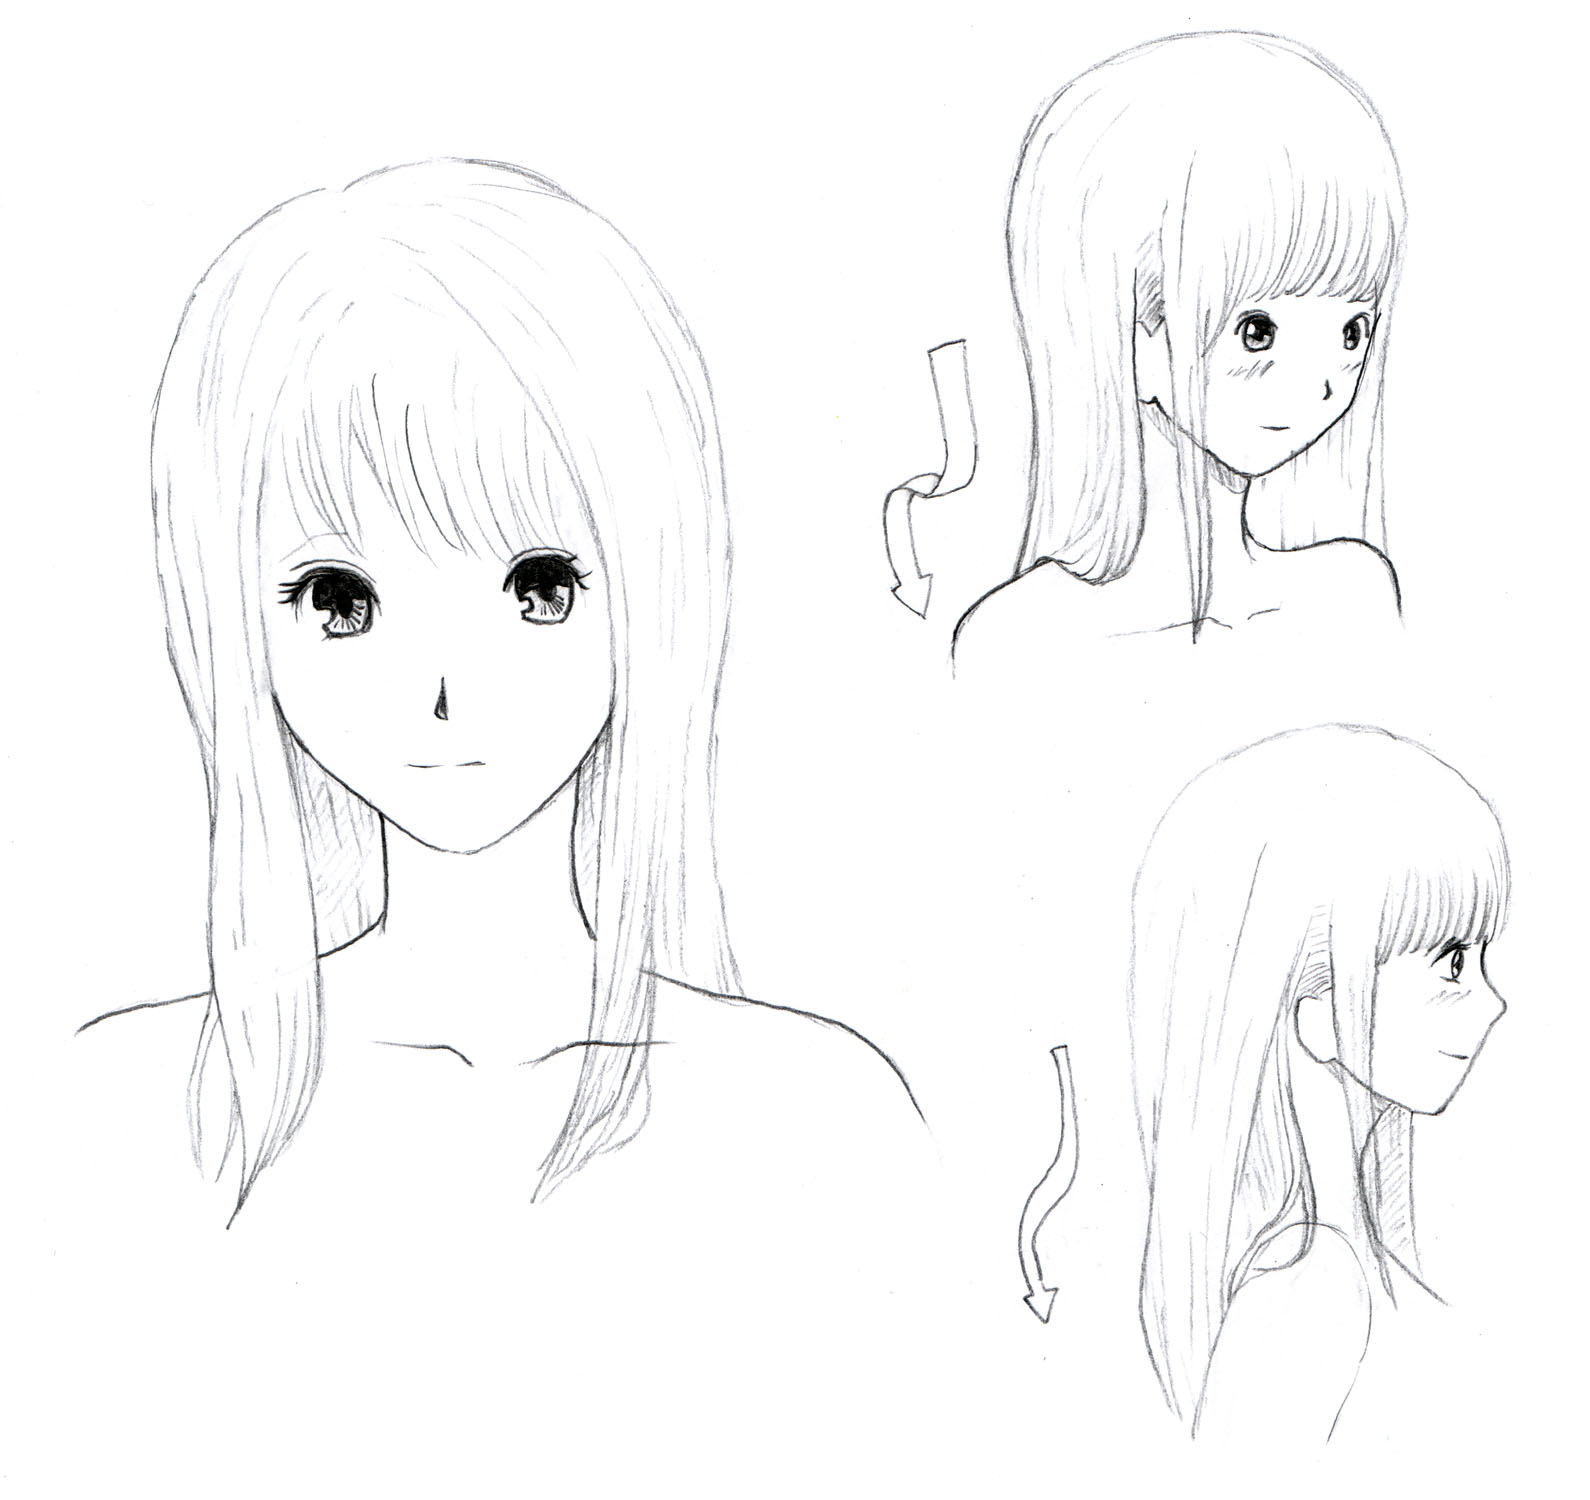 JohnnyBro's How To Draw Manga: How to Draw Manga Hair (Part 1: The Basics)